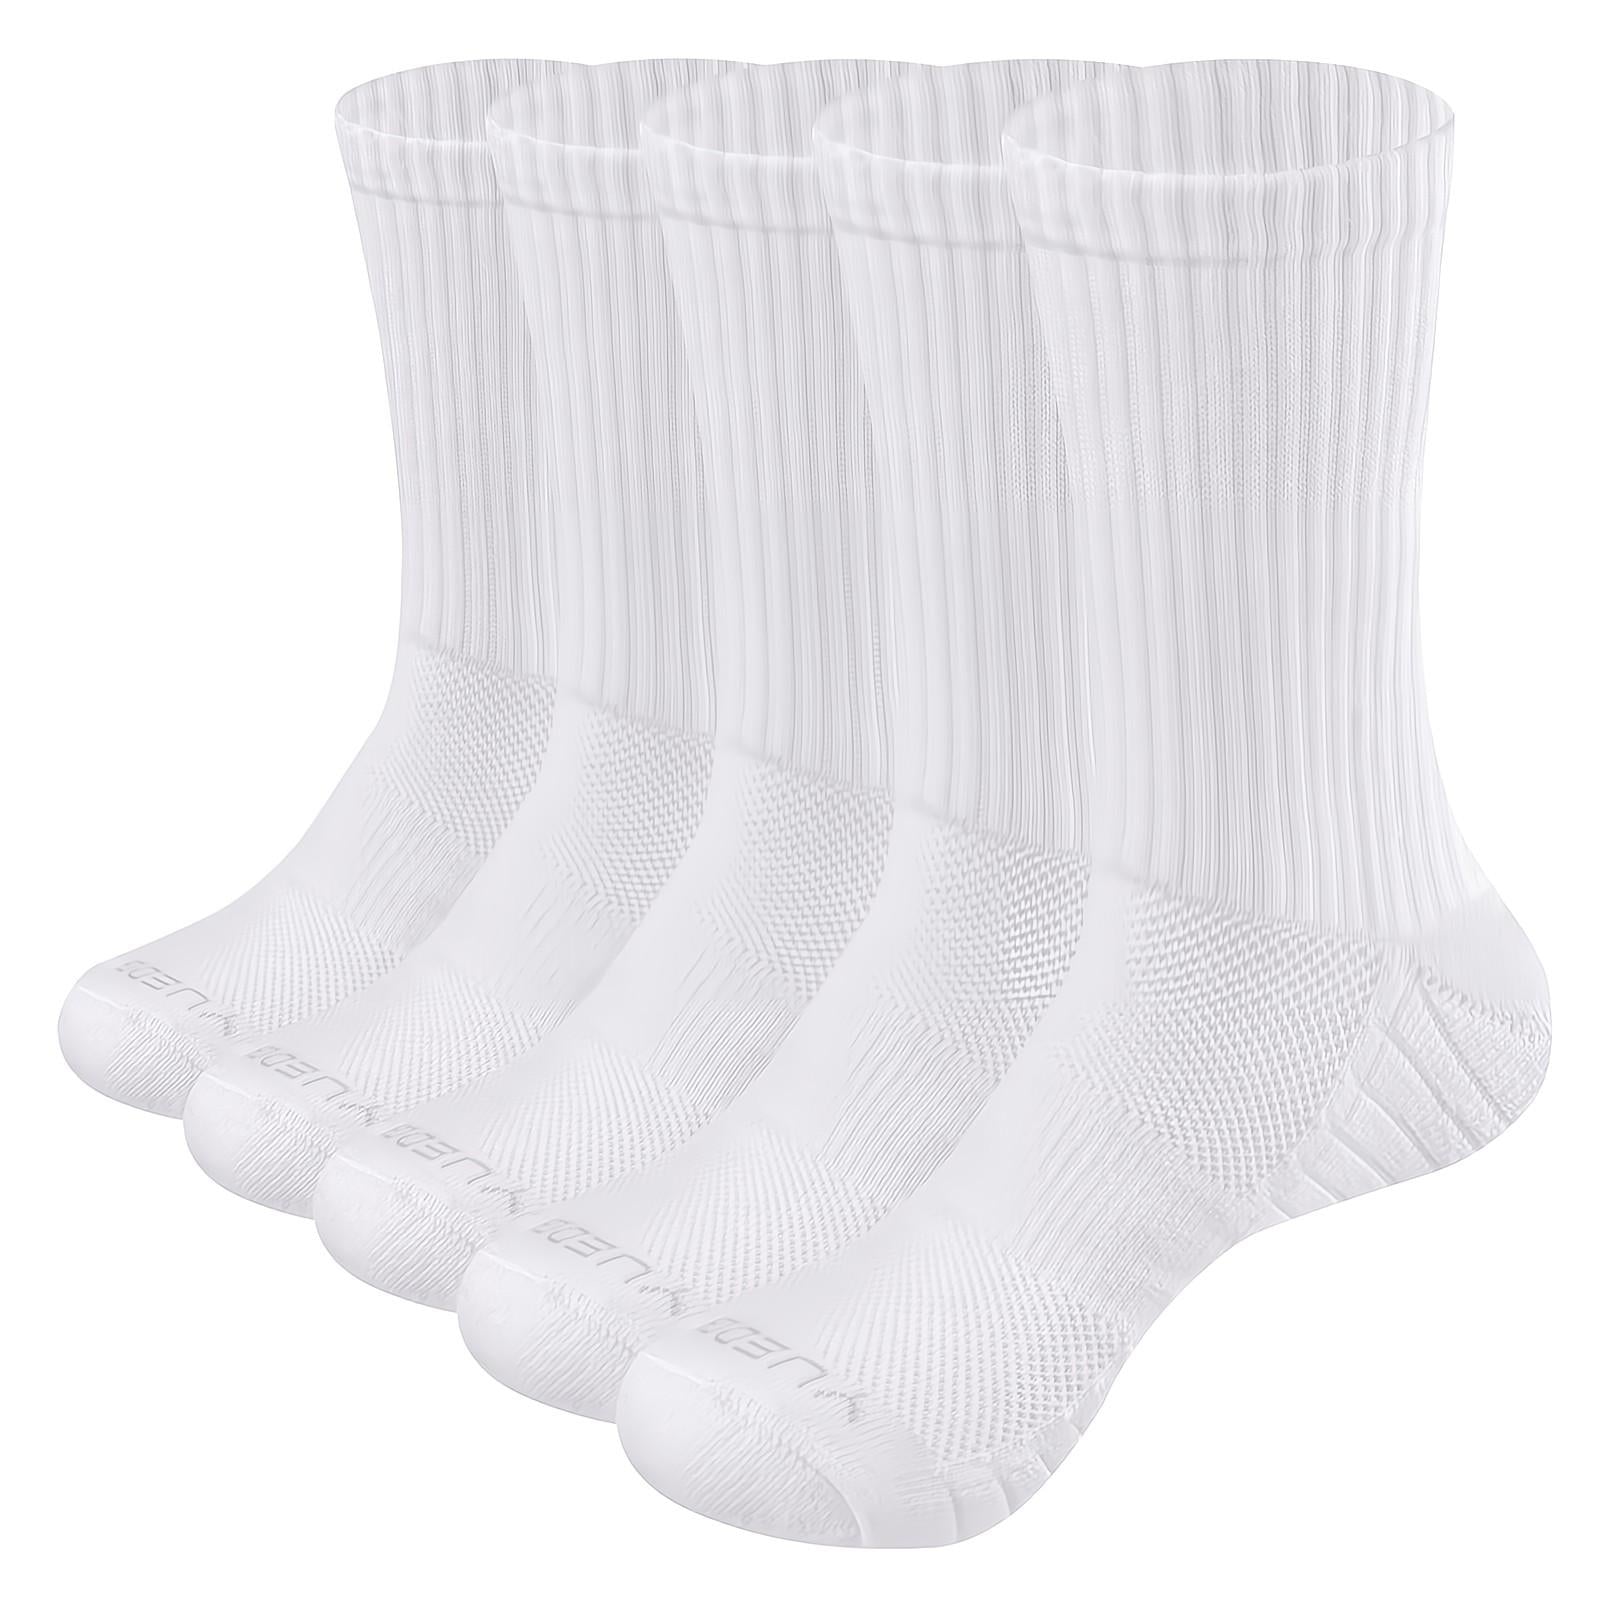 Comprar white 5 pairs Thick Breathable Cotton Cushion  Hiking &amp; Trekking Socks 37-46 EU